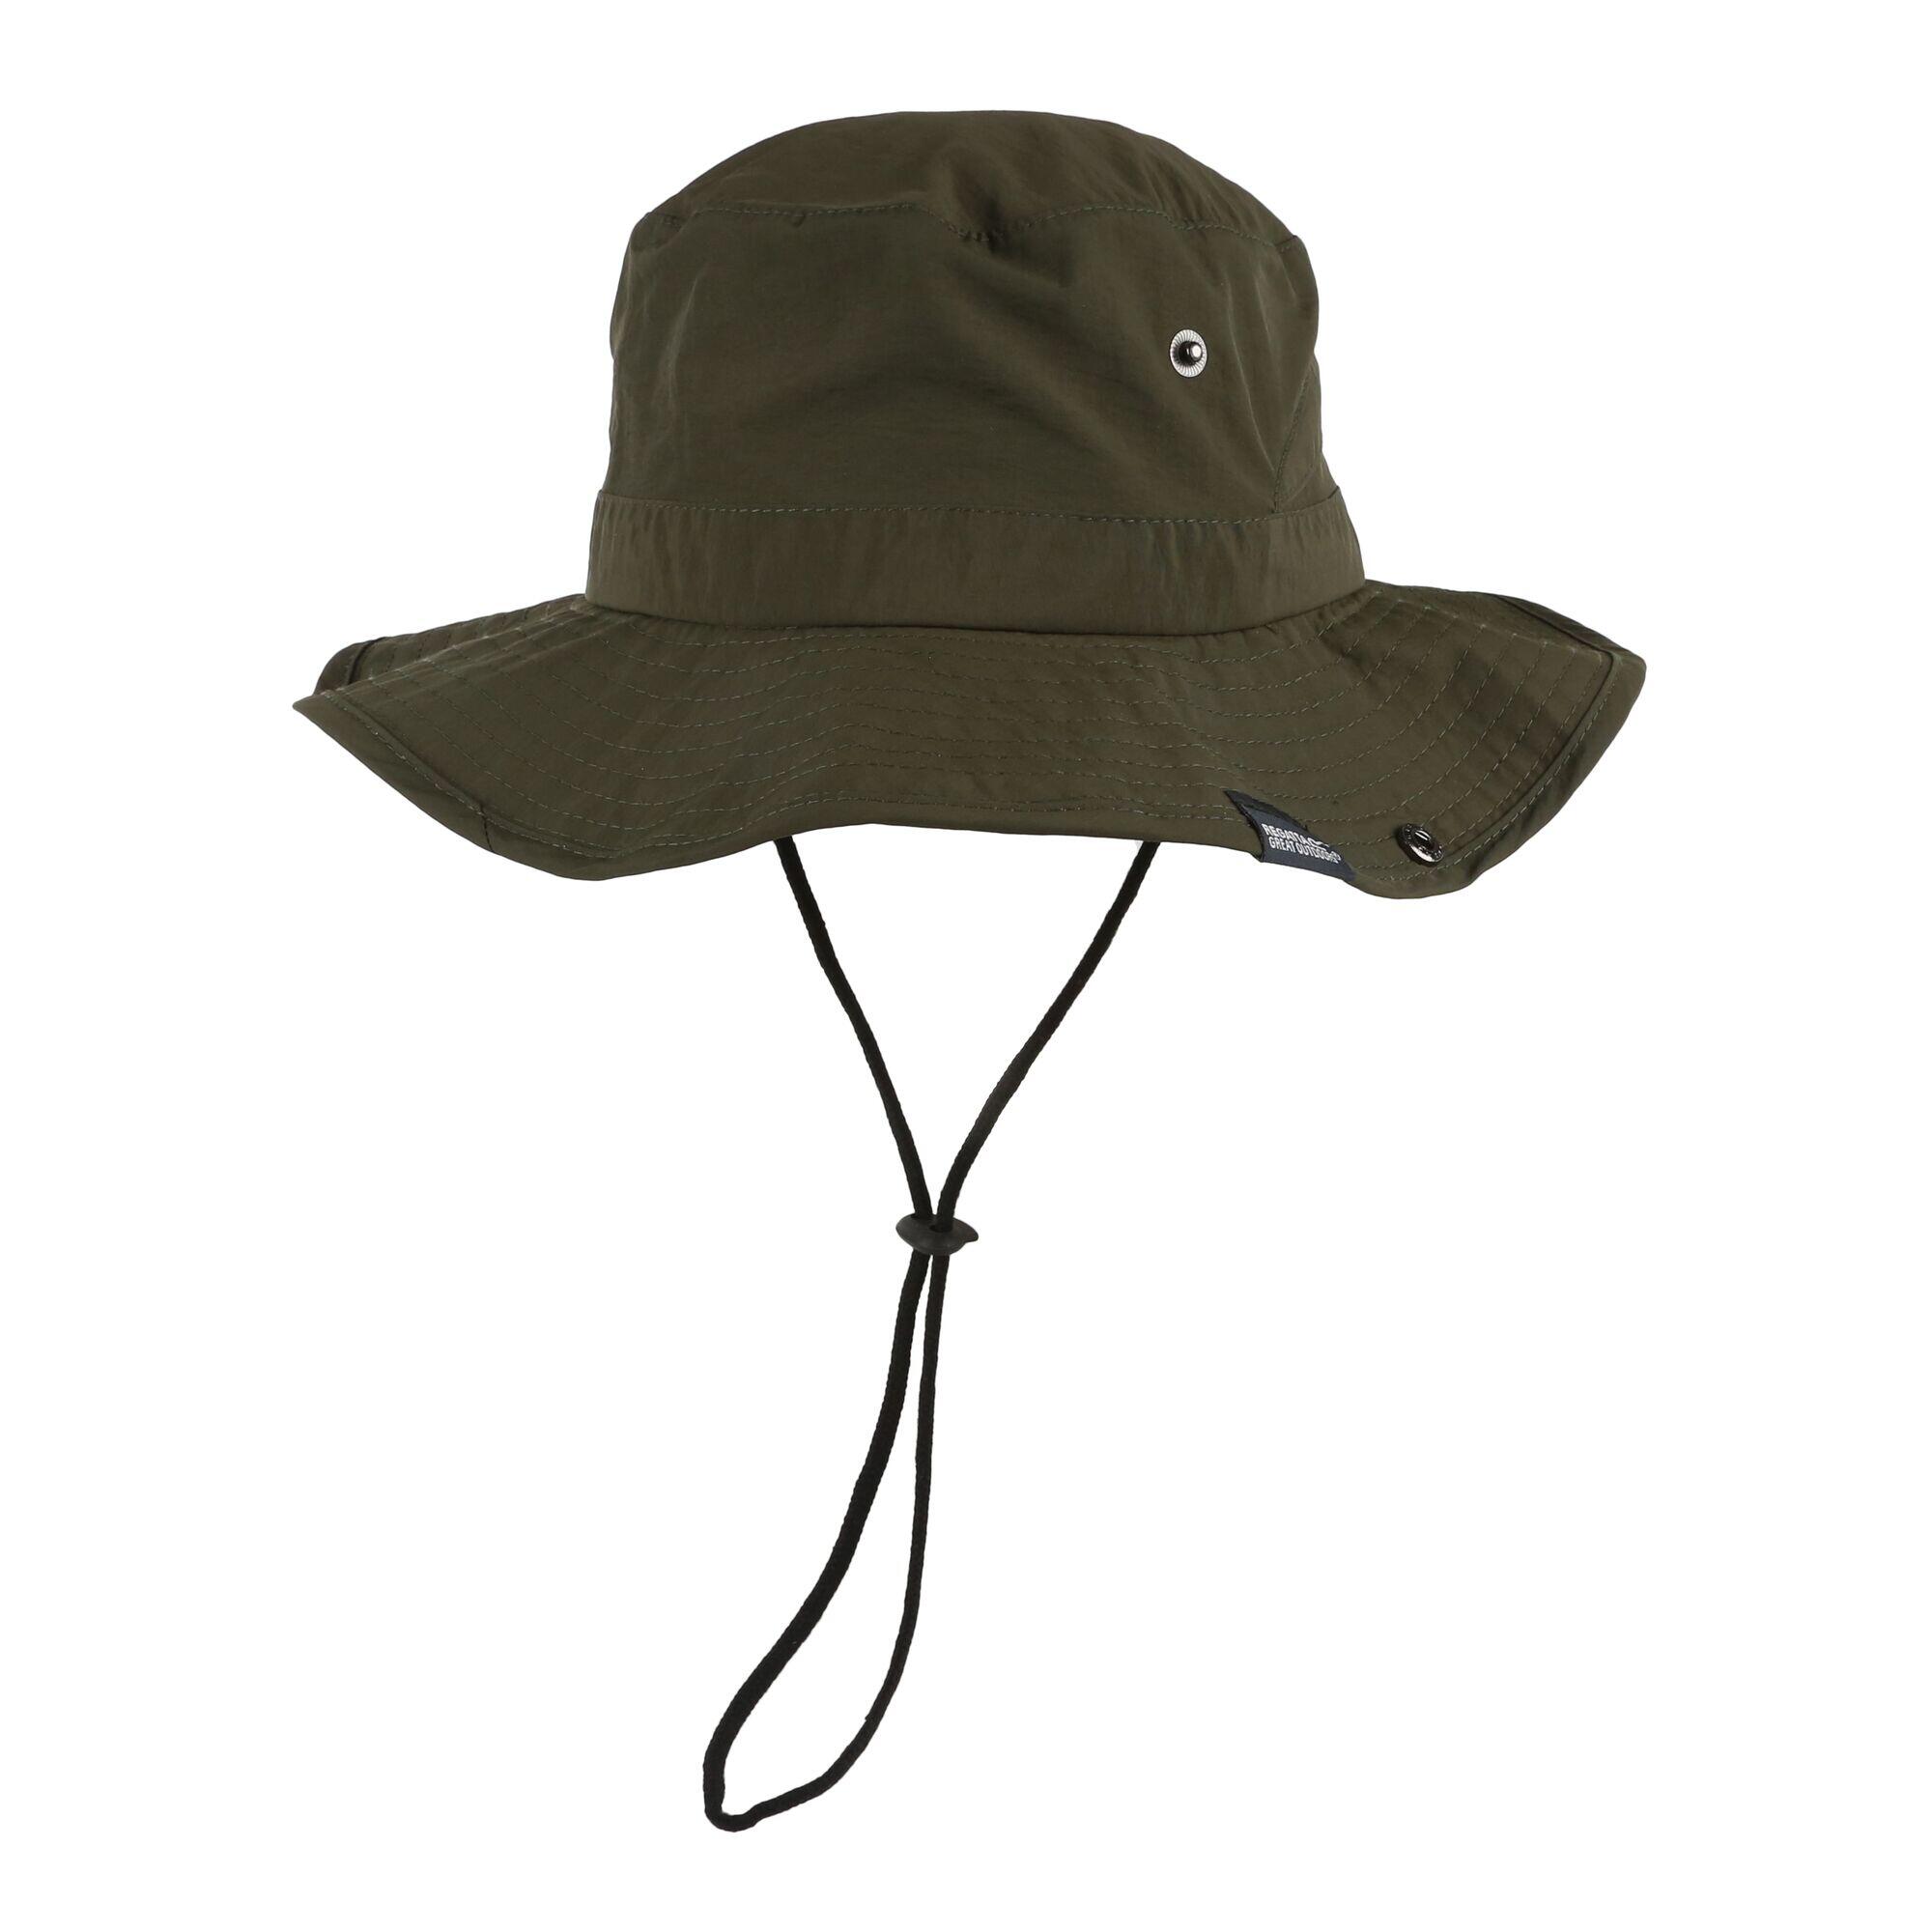 Great Outdoors Unisex Adventure Tech Summer Sun Hiking Hat (Grape Leaf) 2/4